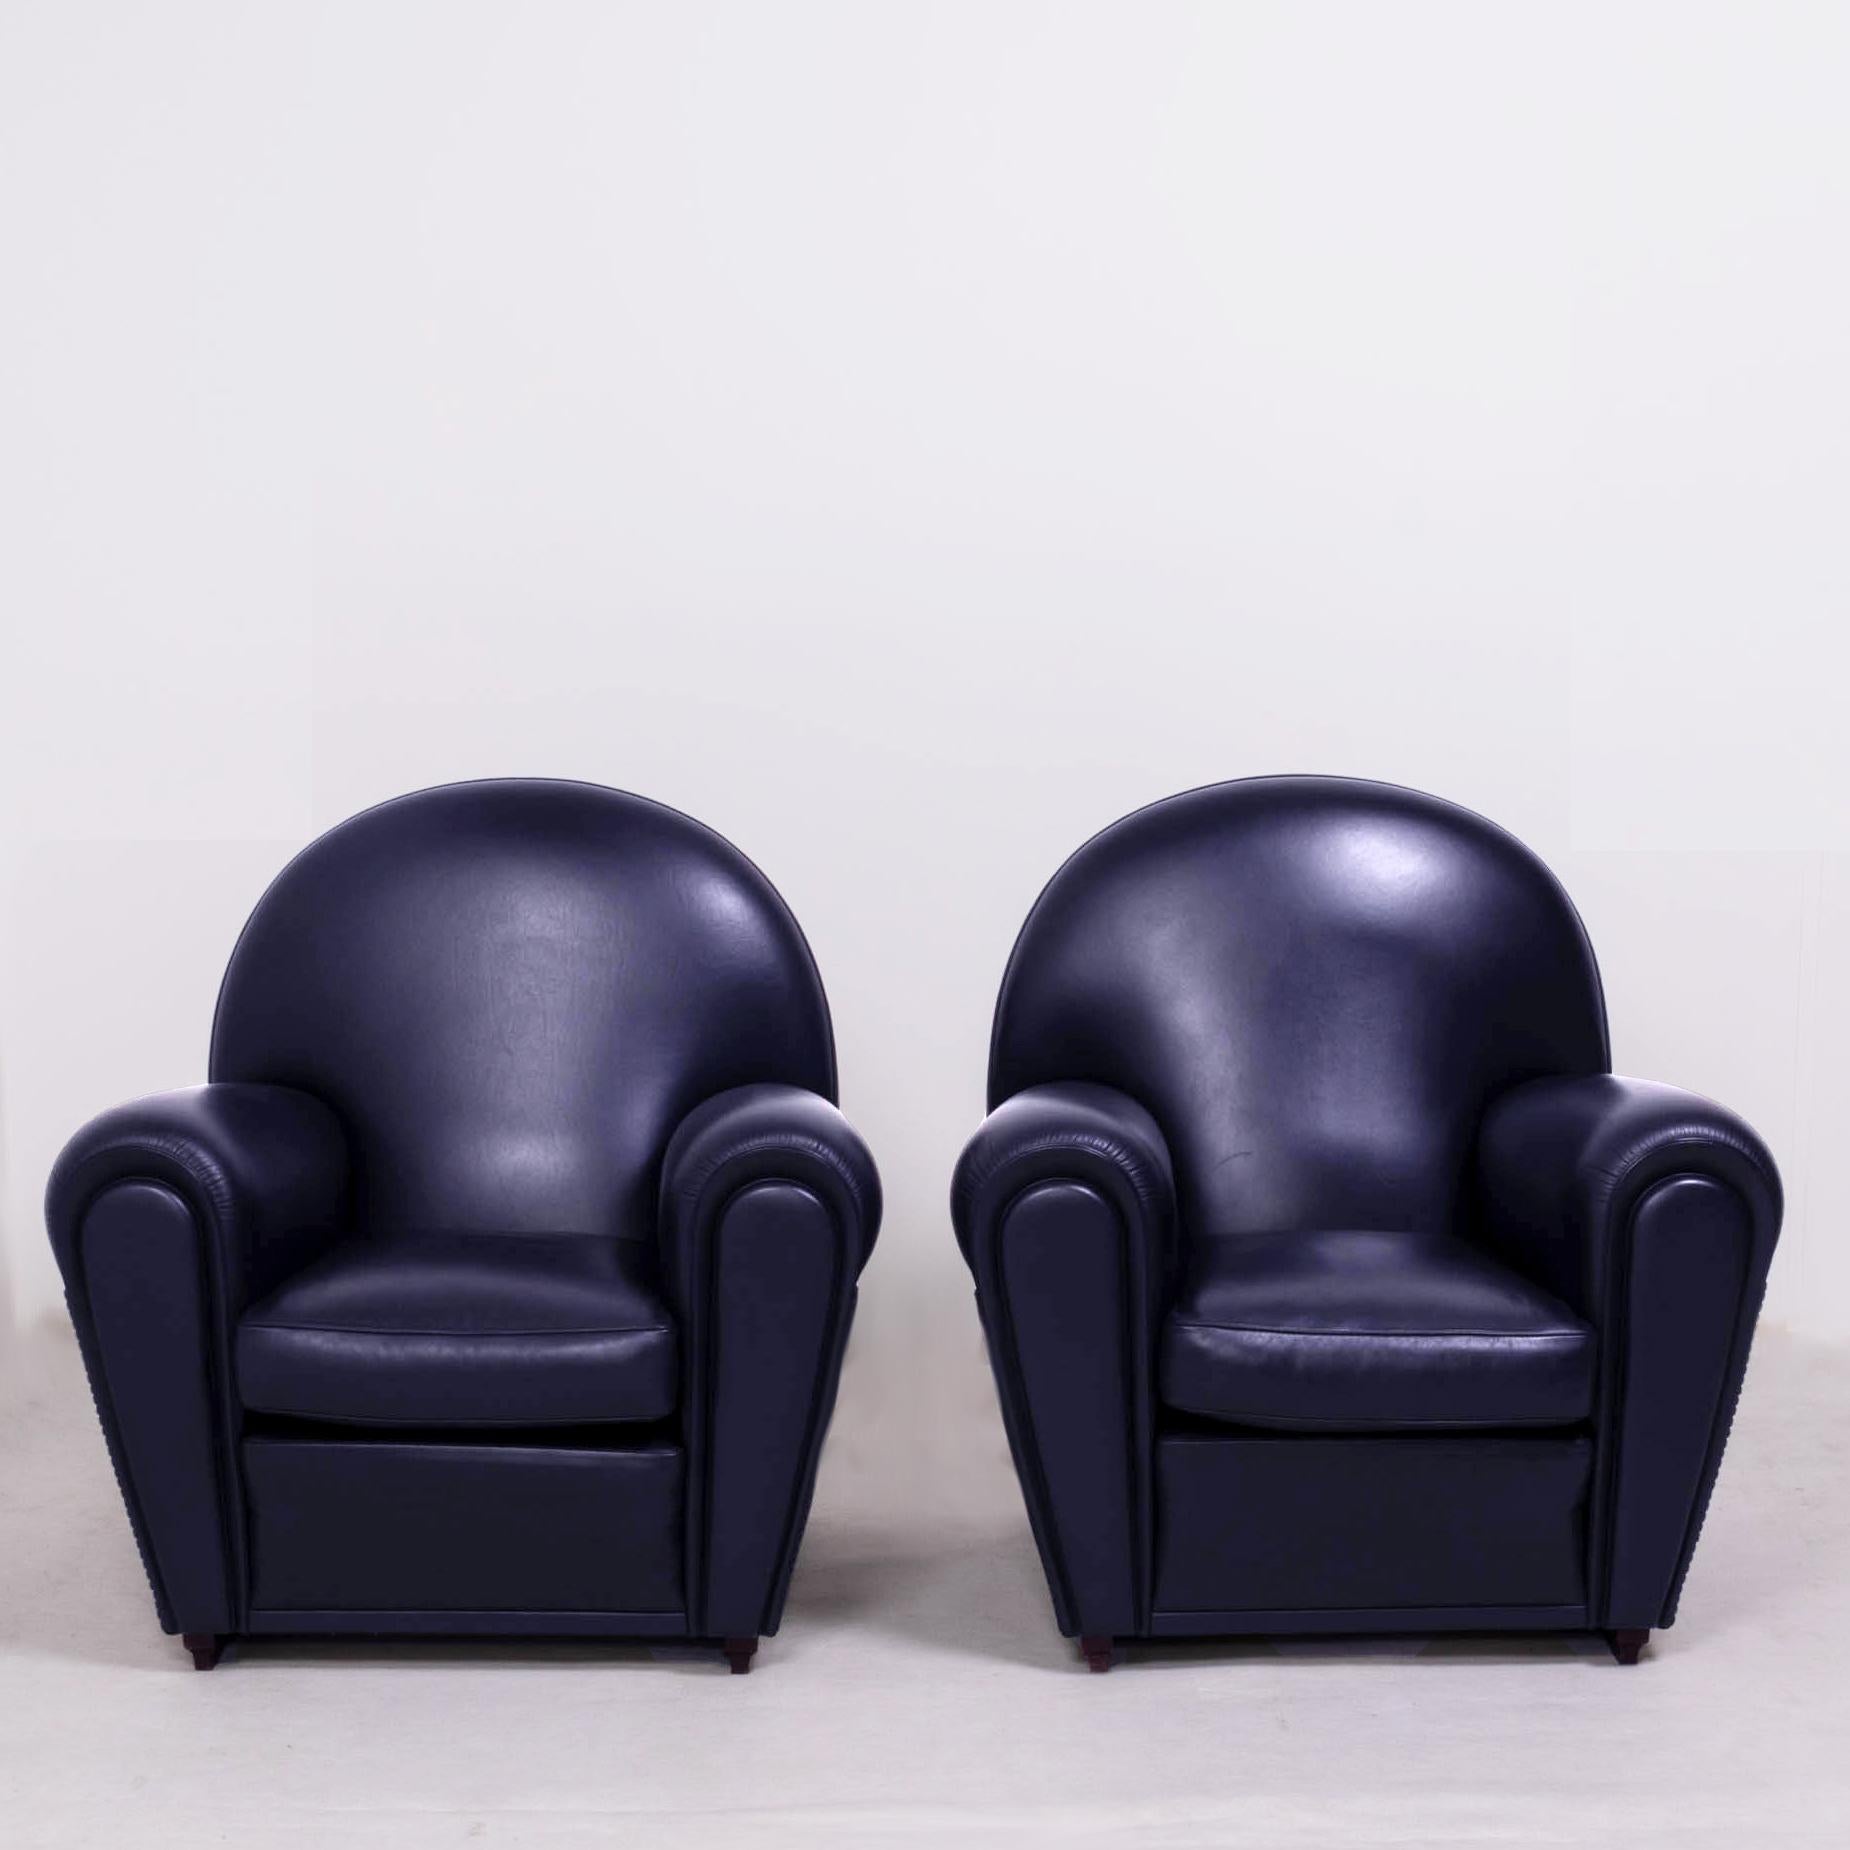 Contemporary Poltrona Frau, Art Deco style Vanity Fair Black Leather Sofa and armchairs set